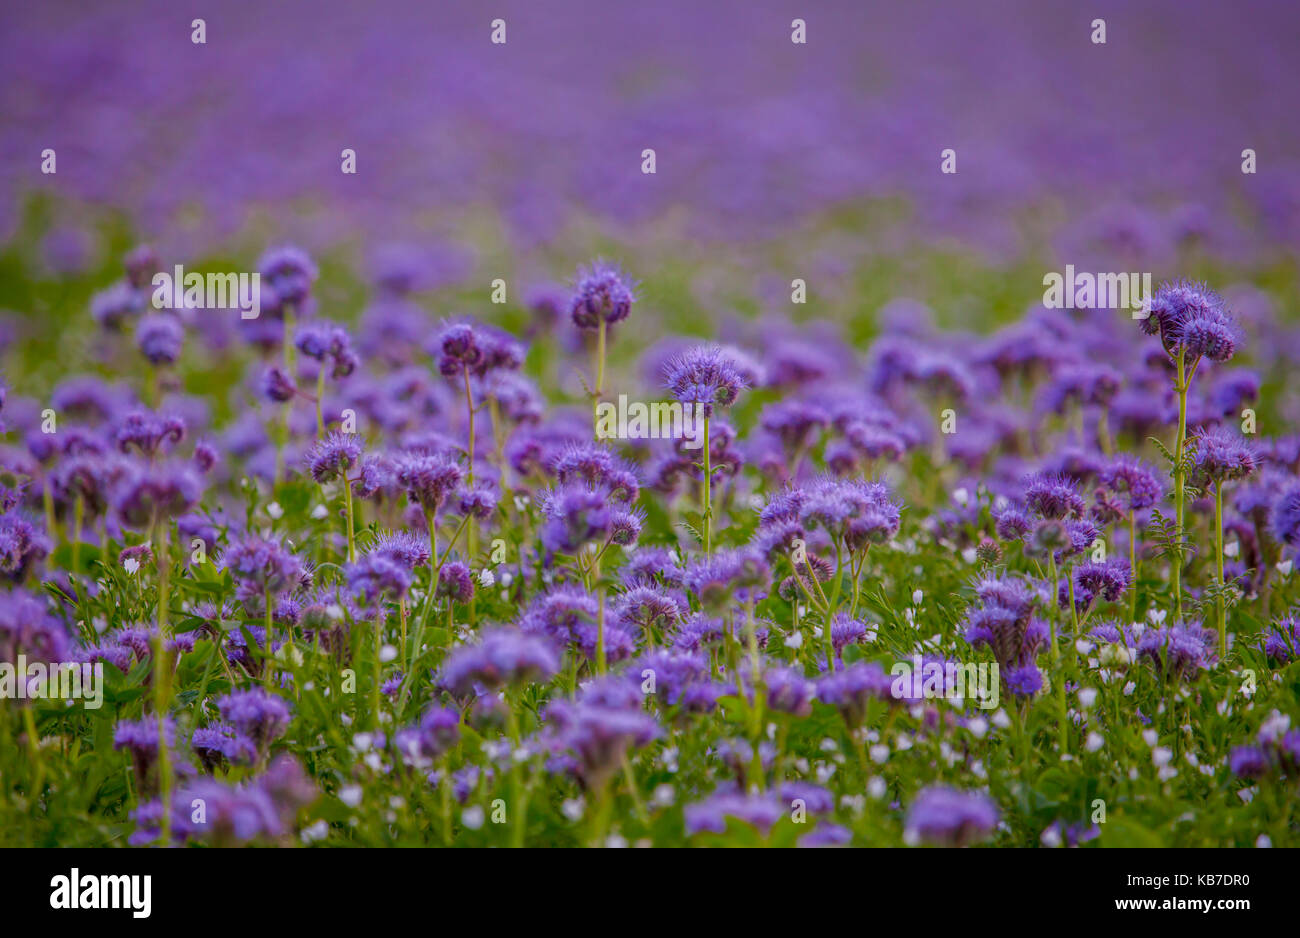 Phacelia blumen Feld violett blühende Natur Landwirtschaft Felder  Stockfotografie - Alamy